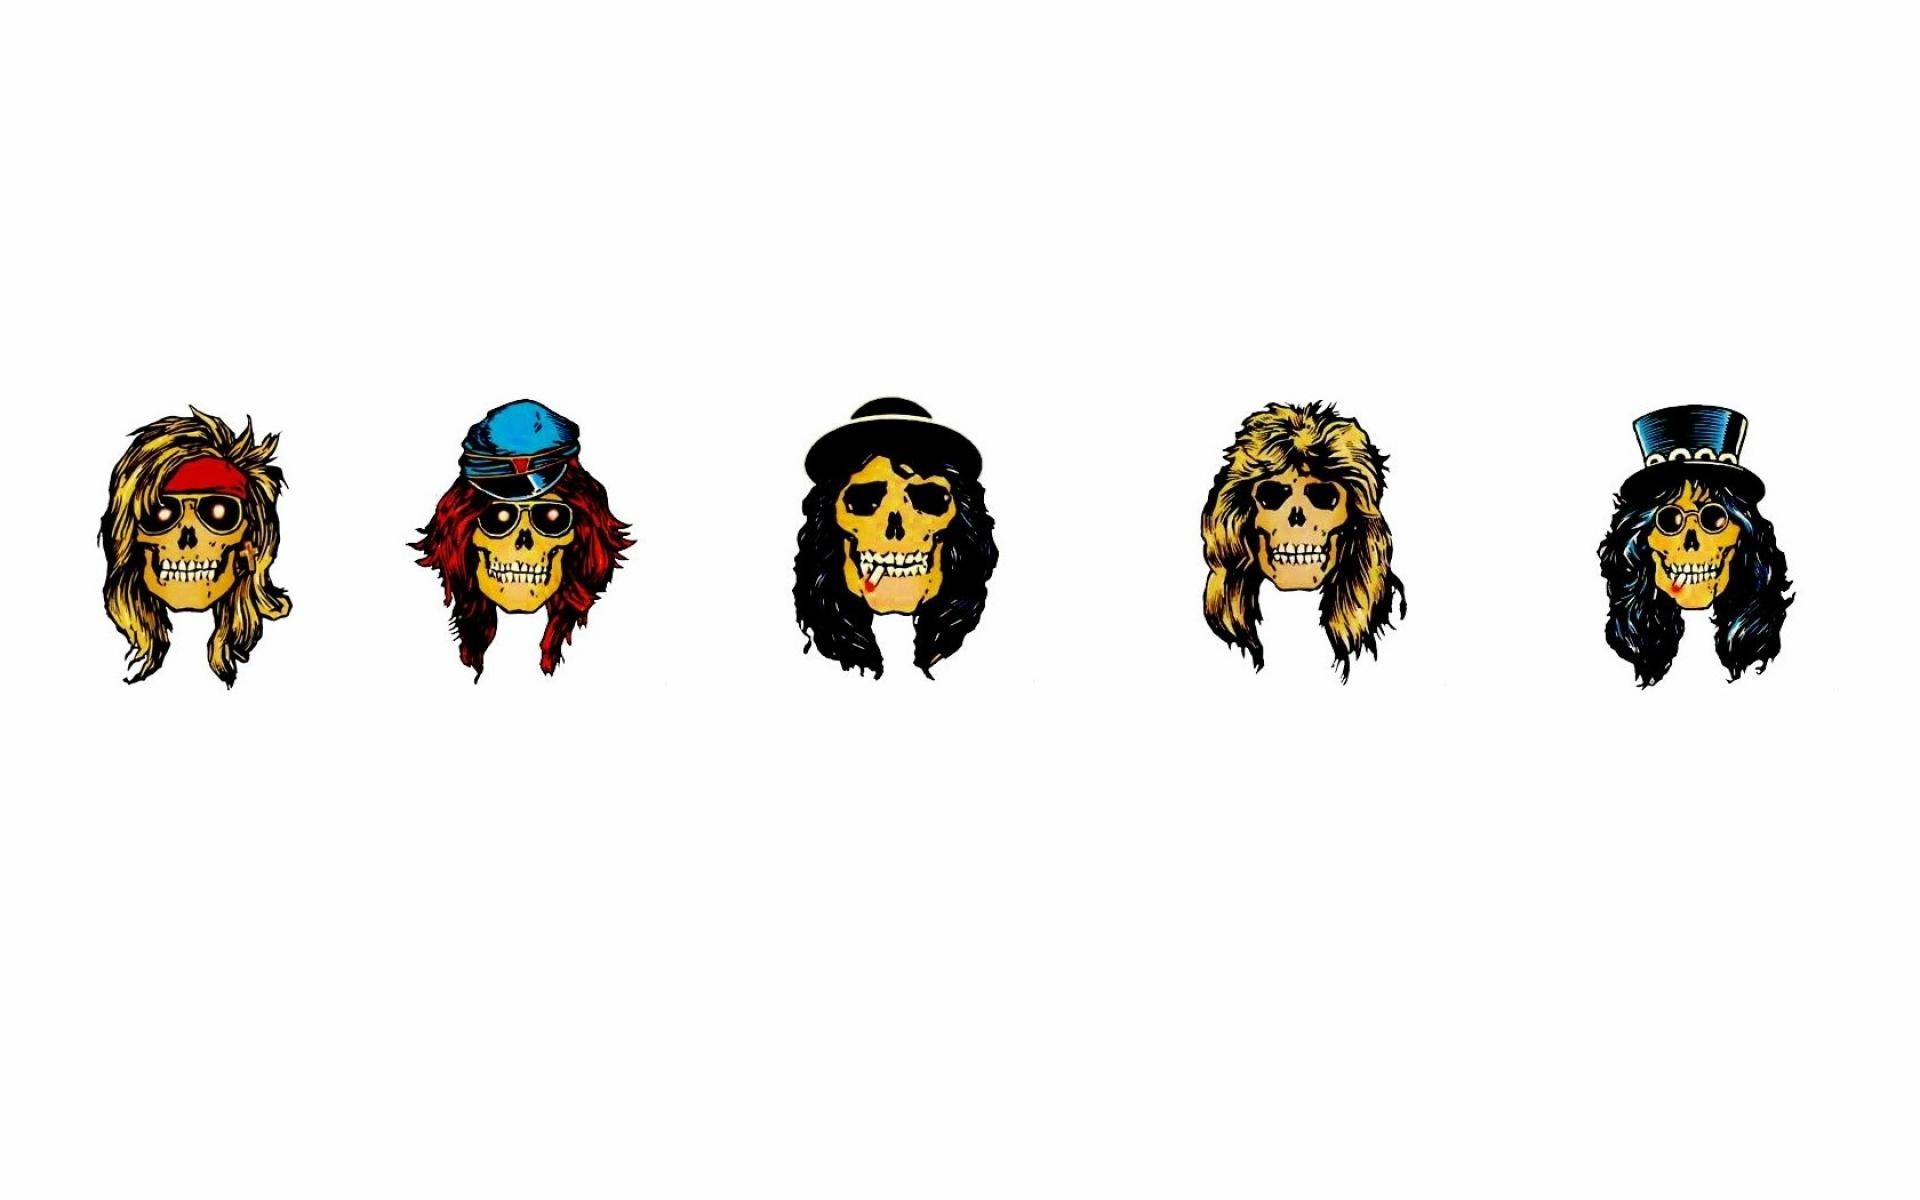 Guns Roses Heavy Metal Hard Rock Bands Groups Album Cover Logo Skulls Slash  Axel Rose Pictures For Desktop